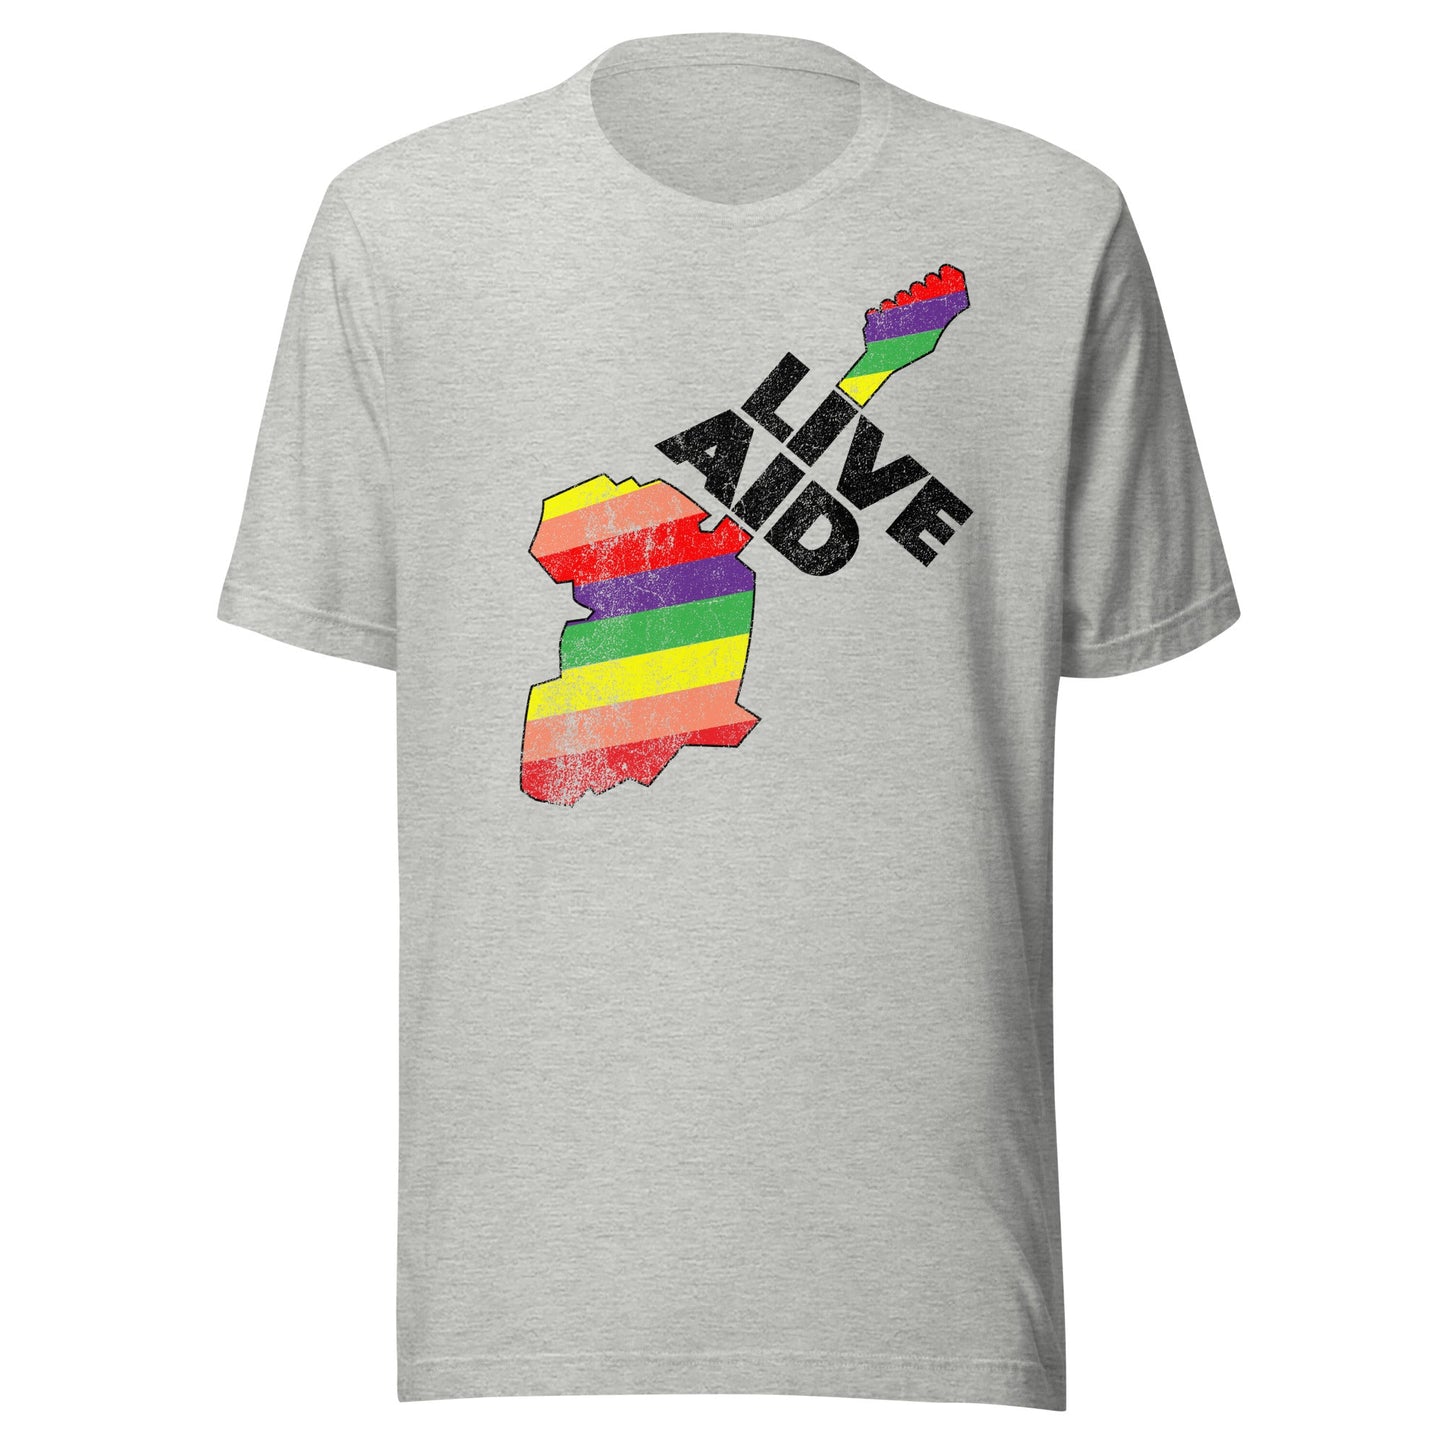 Live Aid Retro 1985 Concert T-Shirt (Rainbow) - Men's & Women's Vintage Graphic Tee